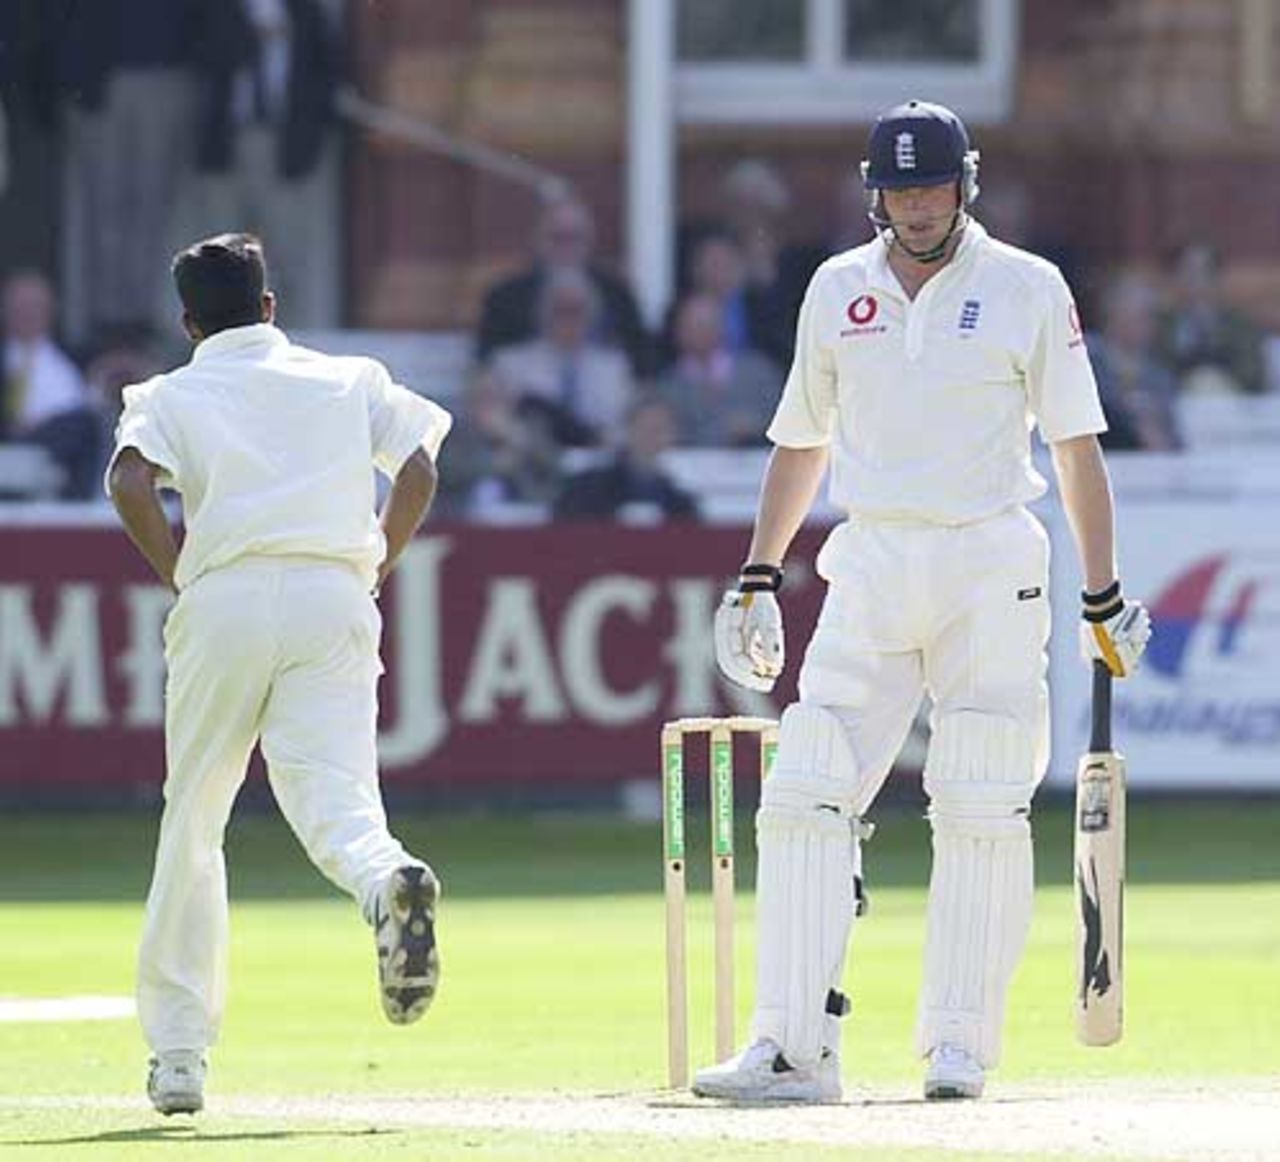 Rueful Freddie Flintoff as victorious bowler Fernando runs past him, Flintoff caught behind for 12, England v Sri Lanka, First Test, Lord's 2002